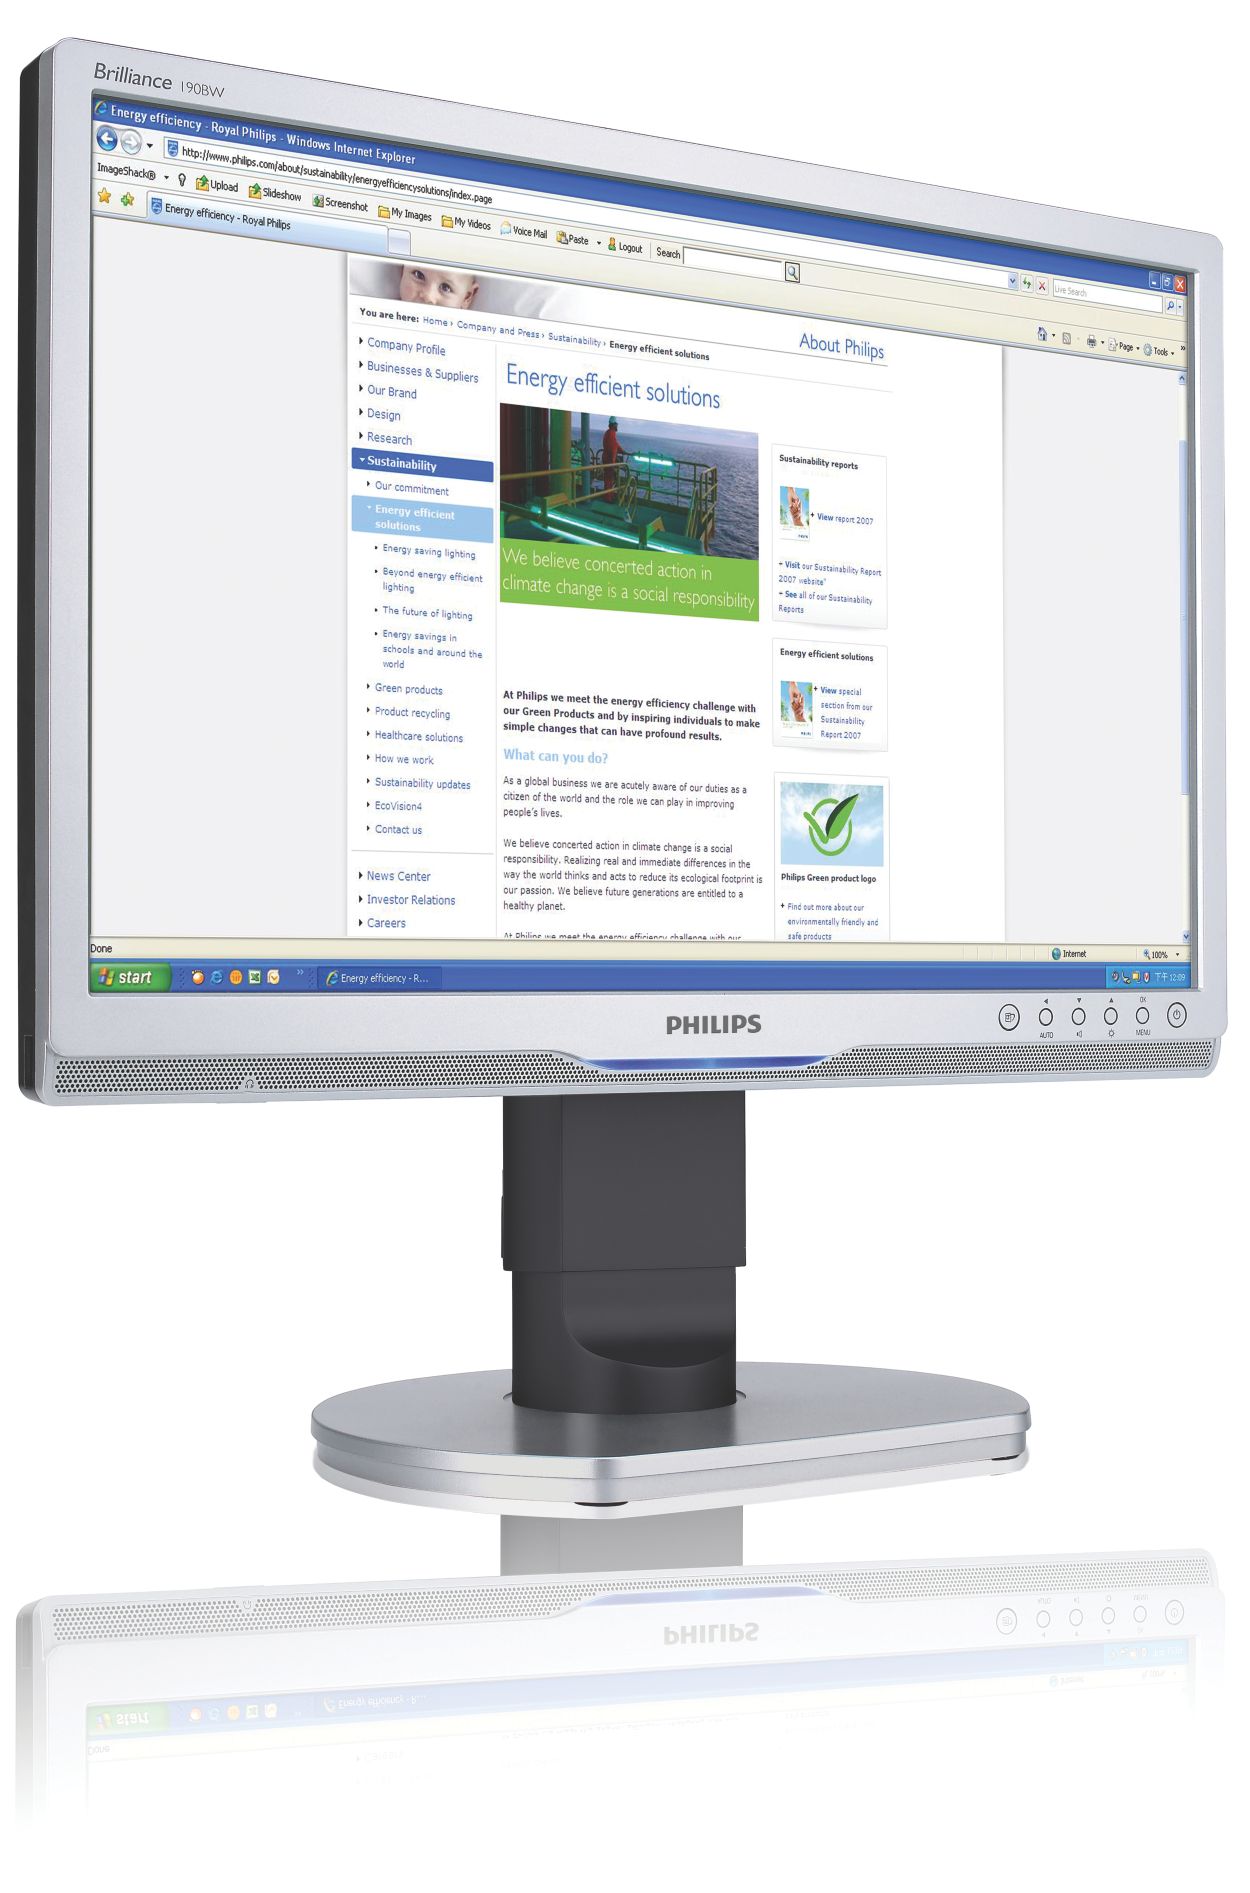 High resolution ergonomic widescreen for business